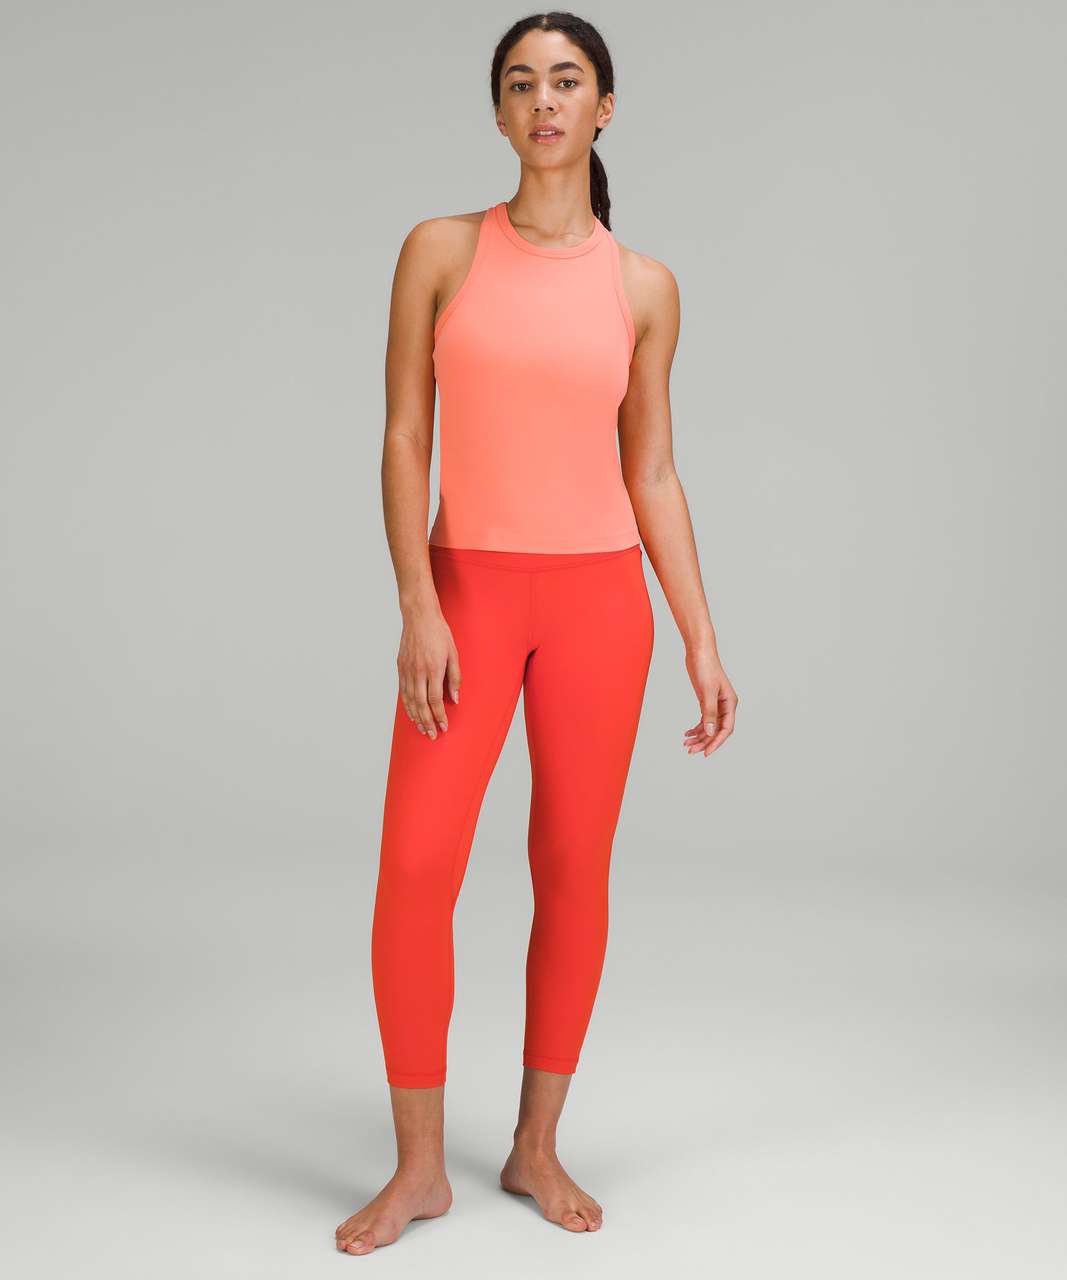 Lululemon Leggings Orange Size 2 - $50 (37% Off Retail) - From valeria